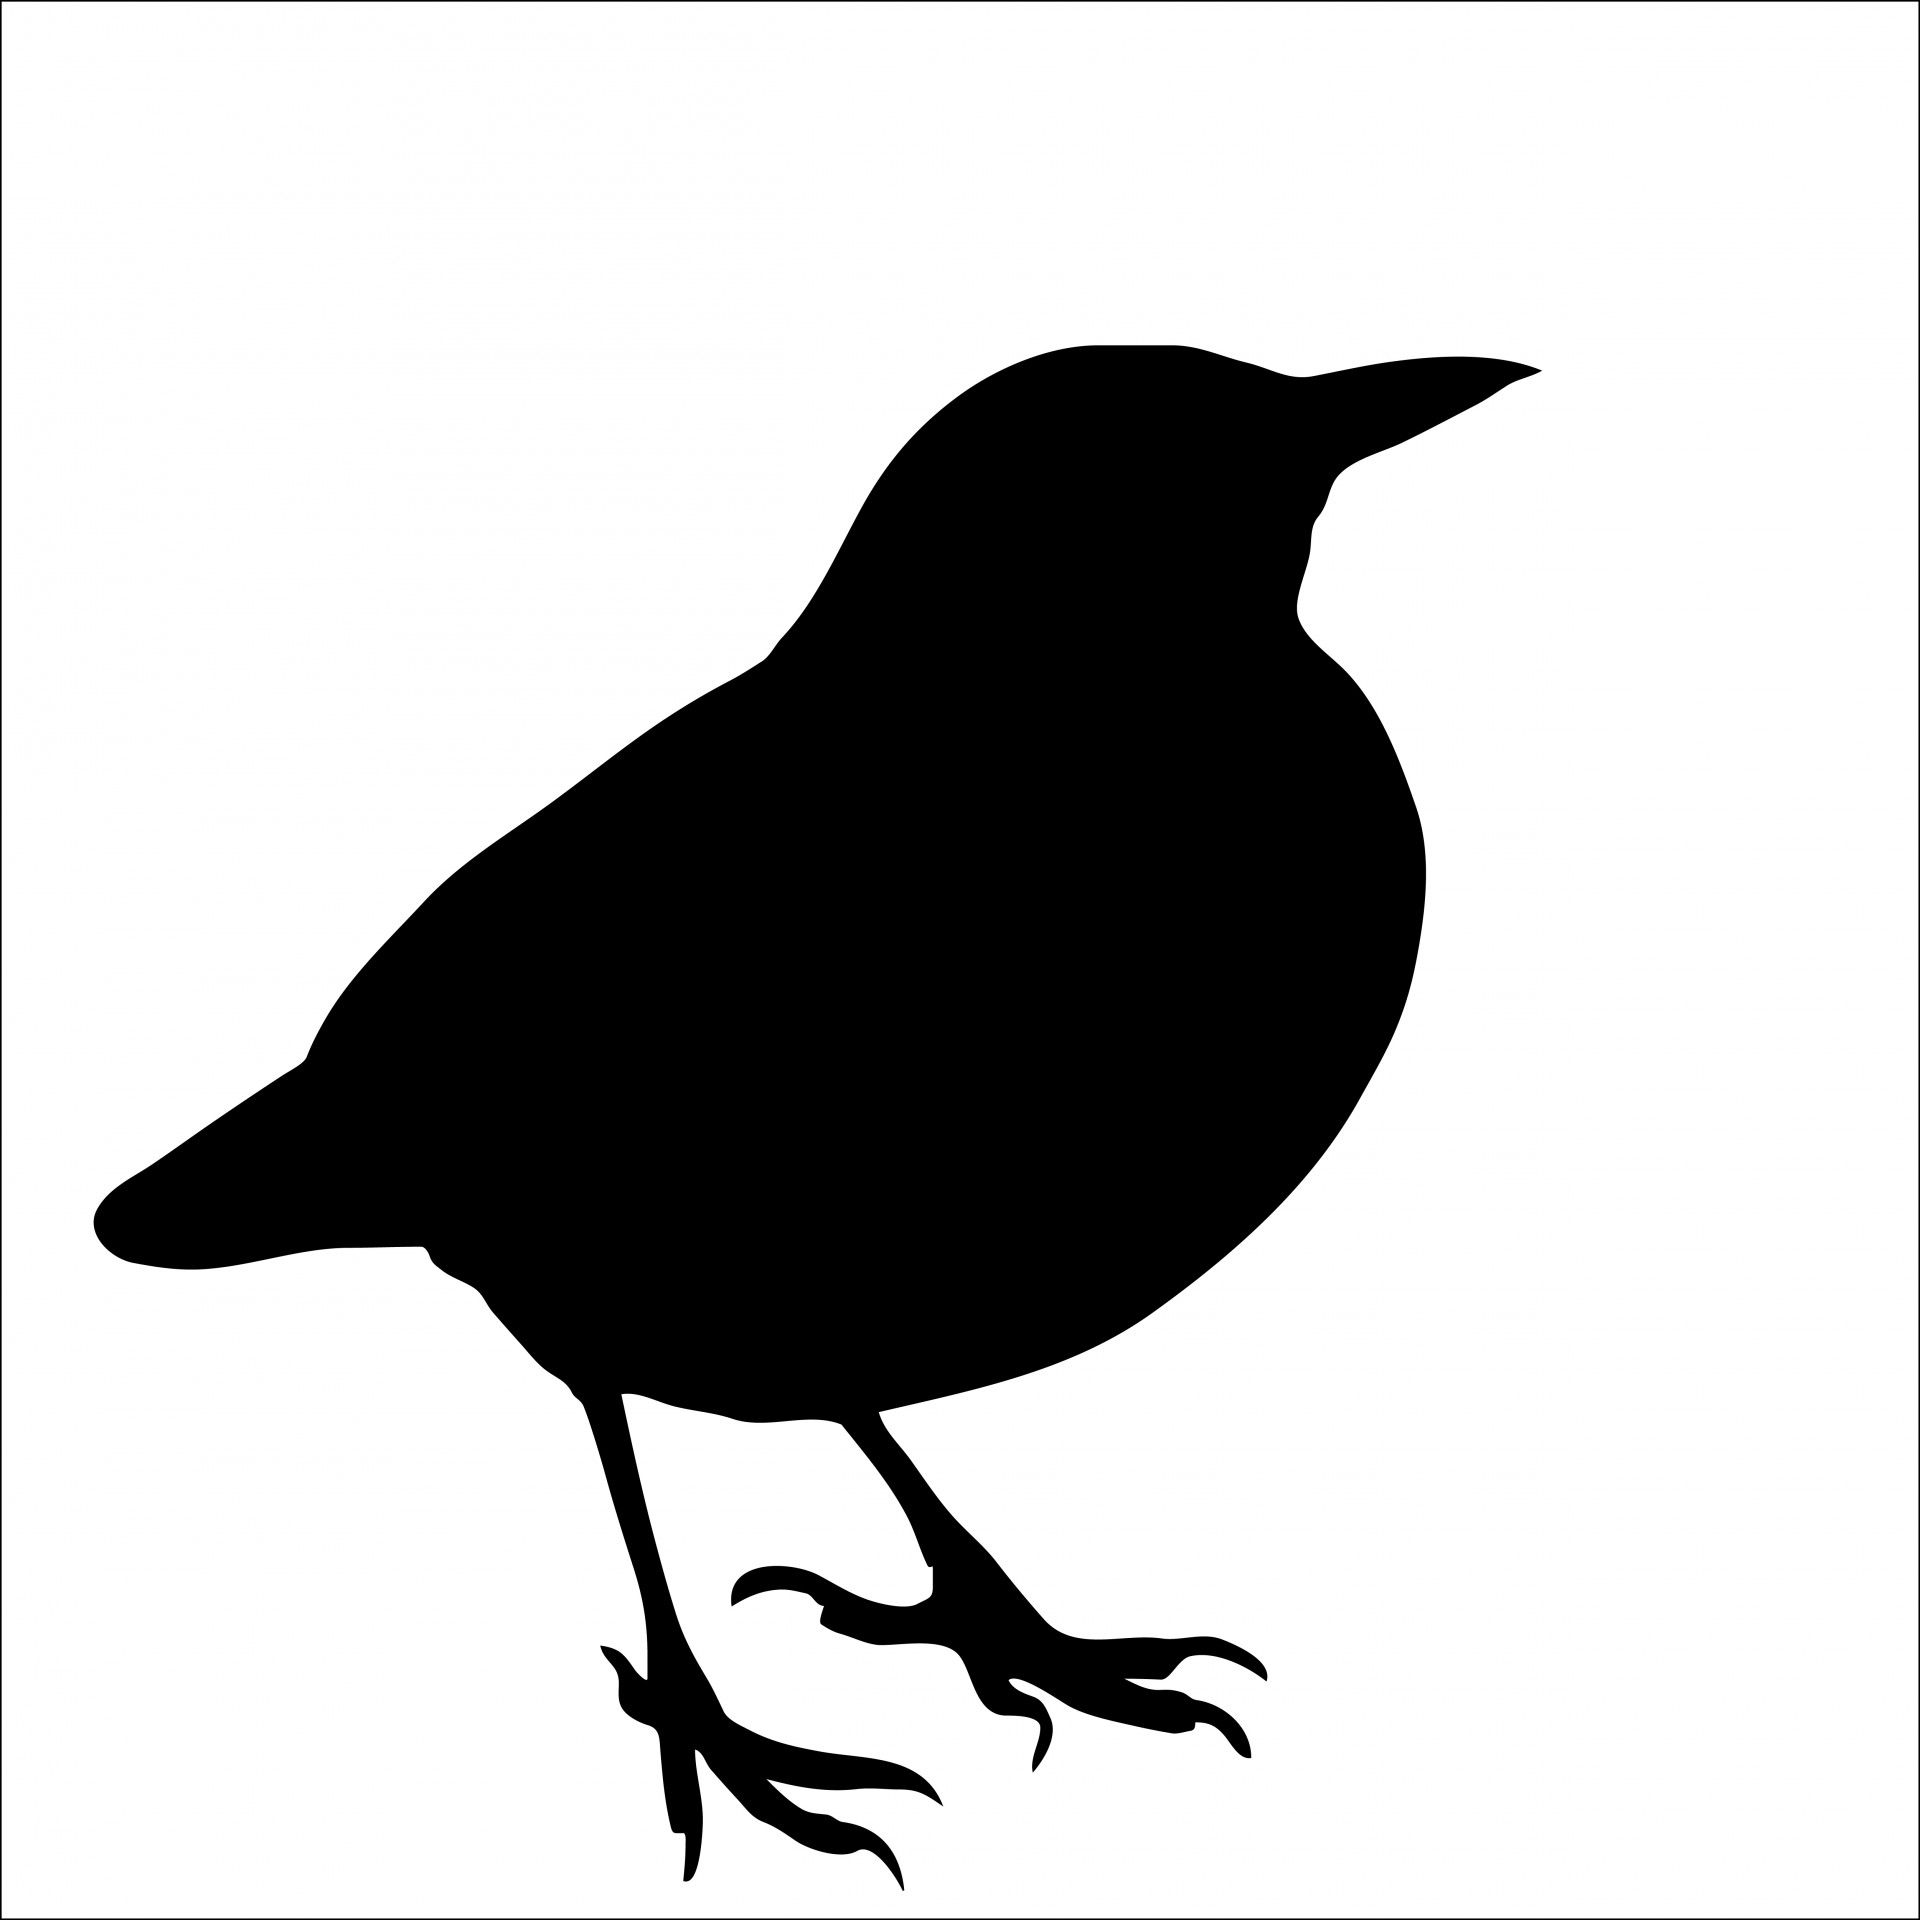 Black silhouette of a blackbird on white background